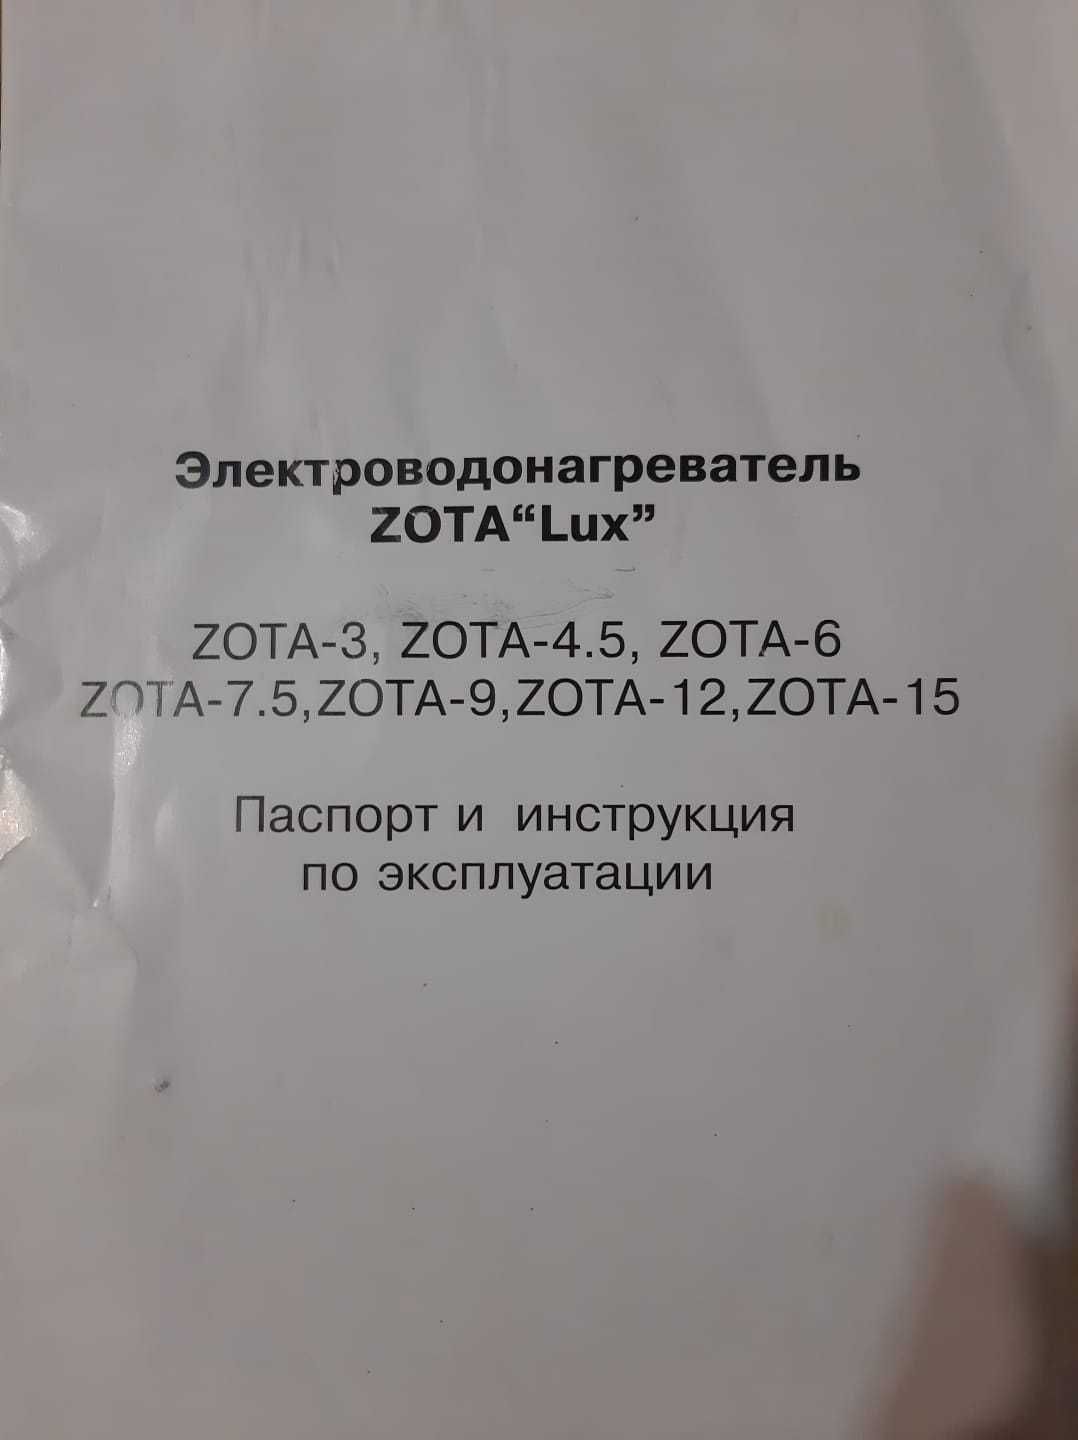 Электрический котел ZOTA "LUX"